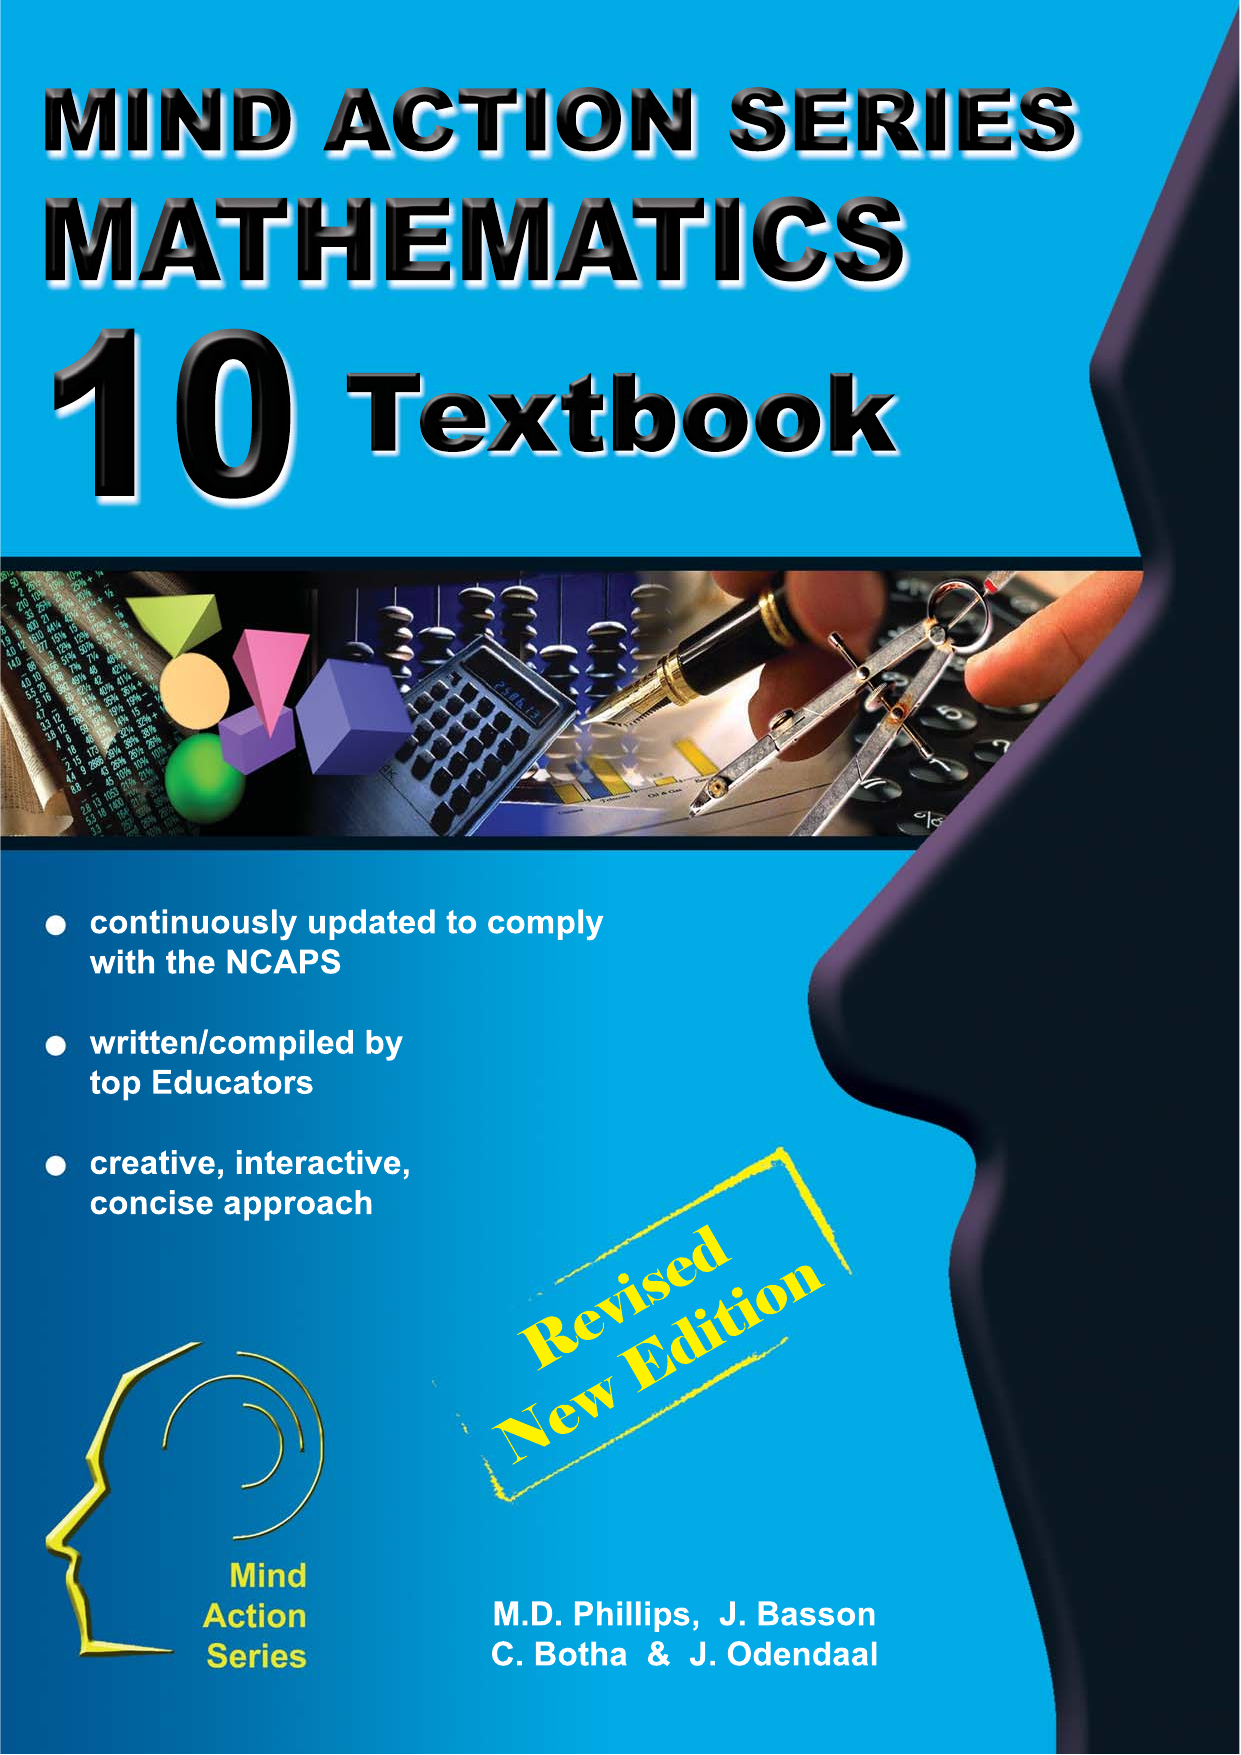 biology textbook pdf grade 10-12 download zambian syllabus